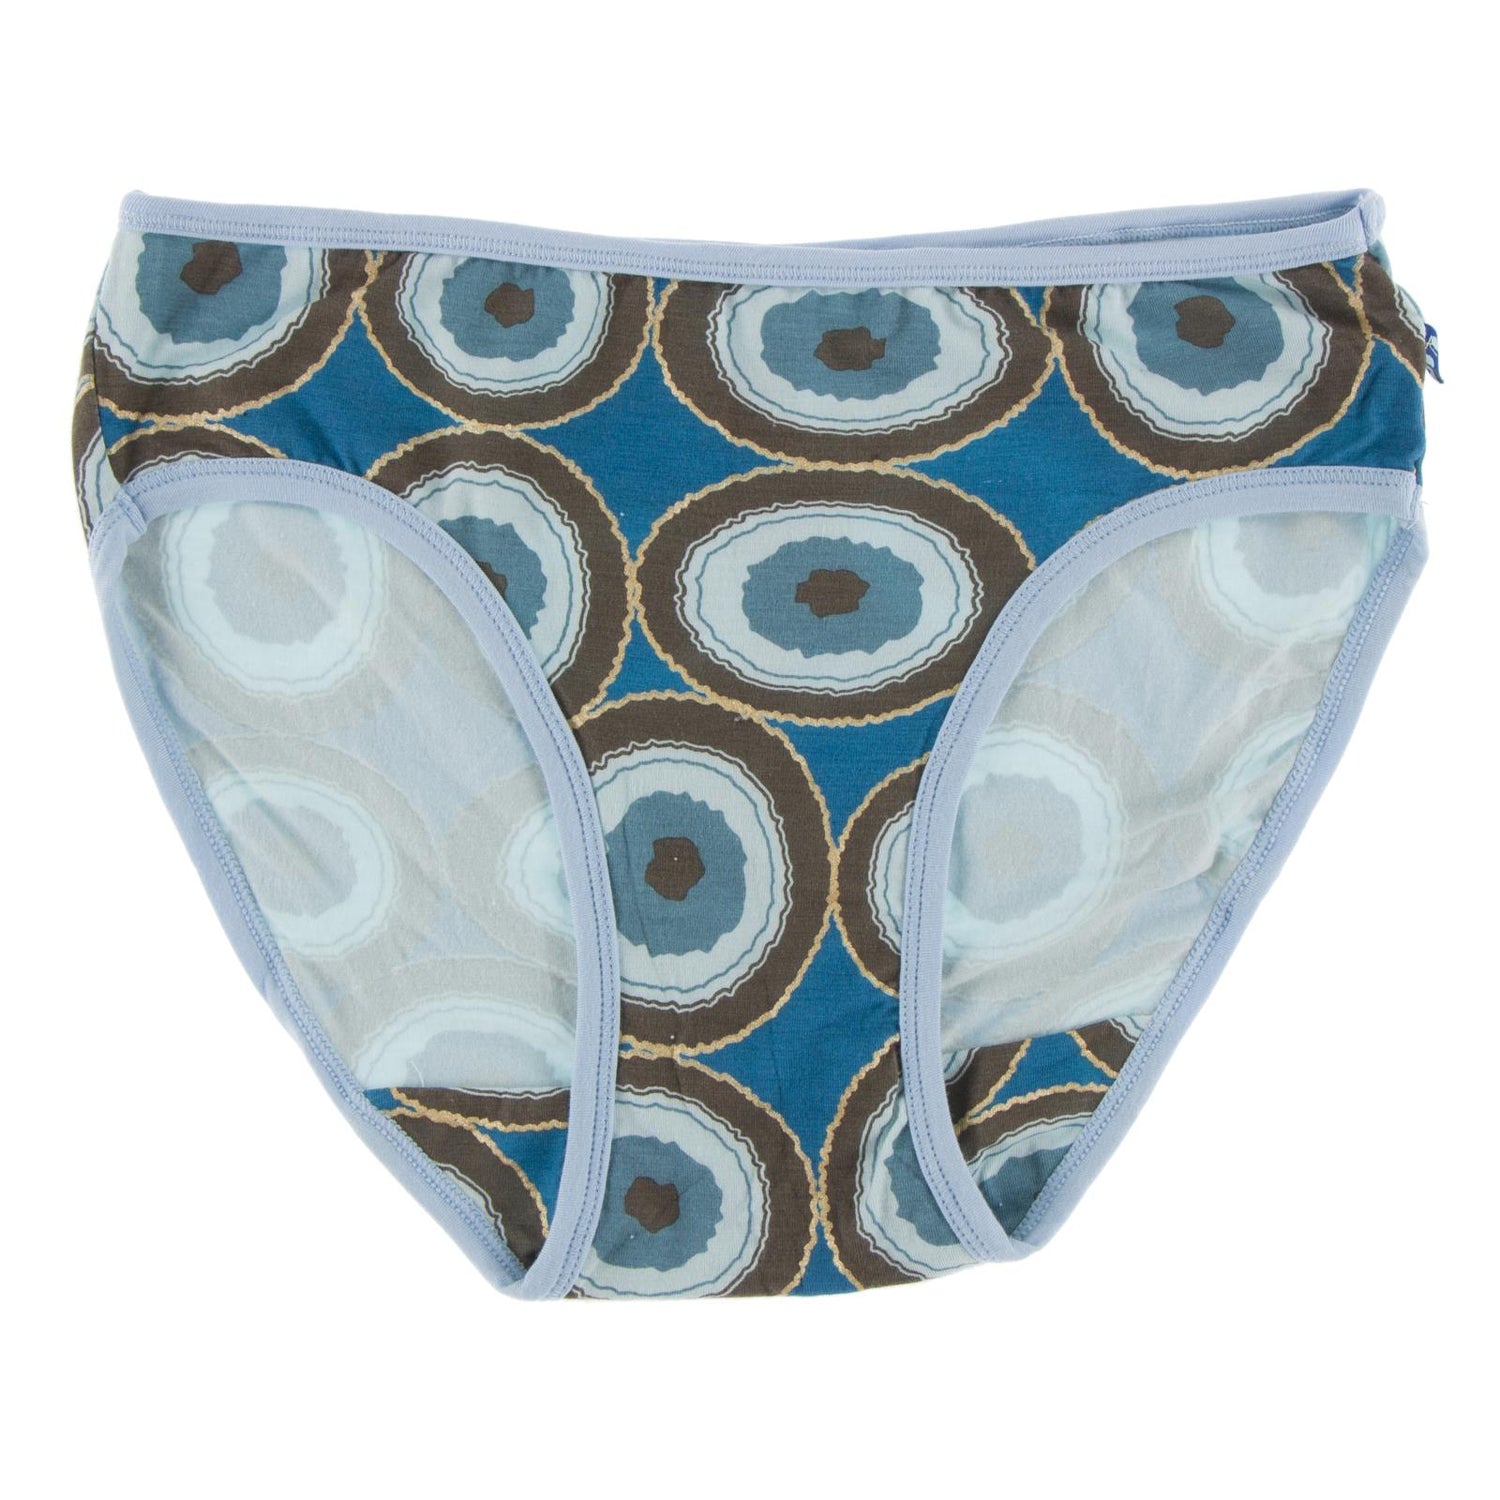 Print Underwear in Heritage Blue Agate Slices with Pond Trim